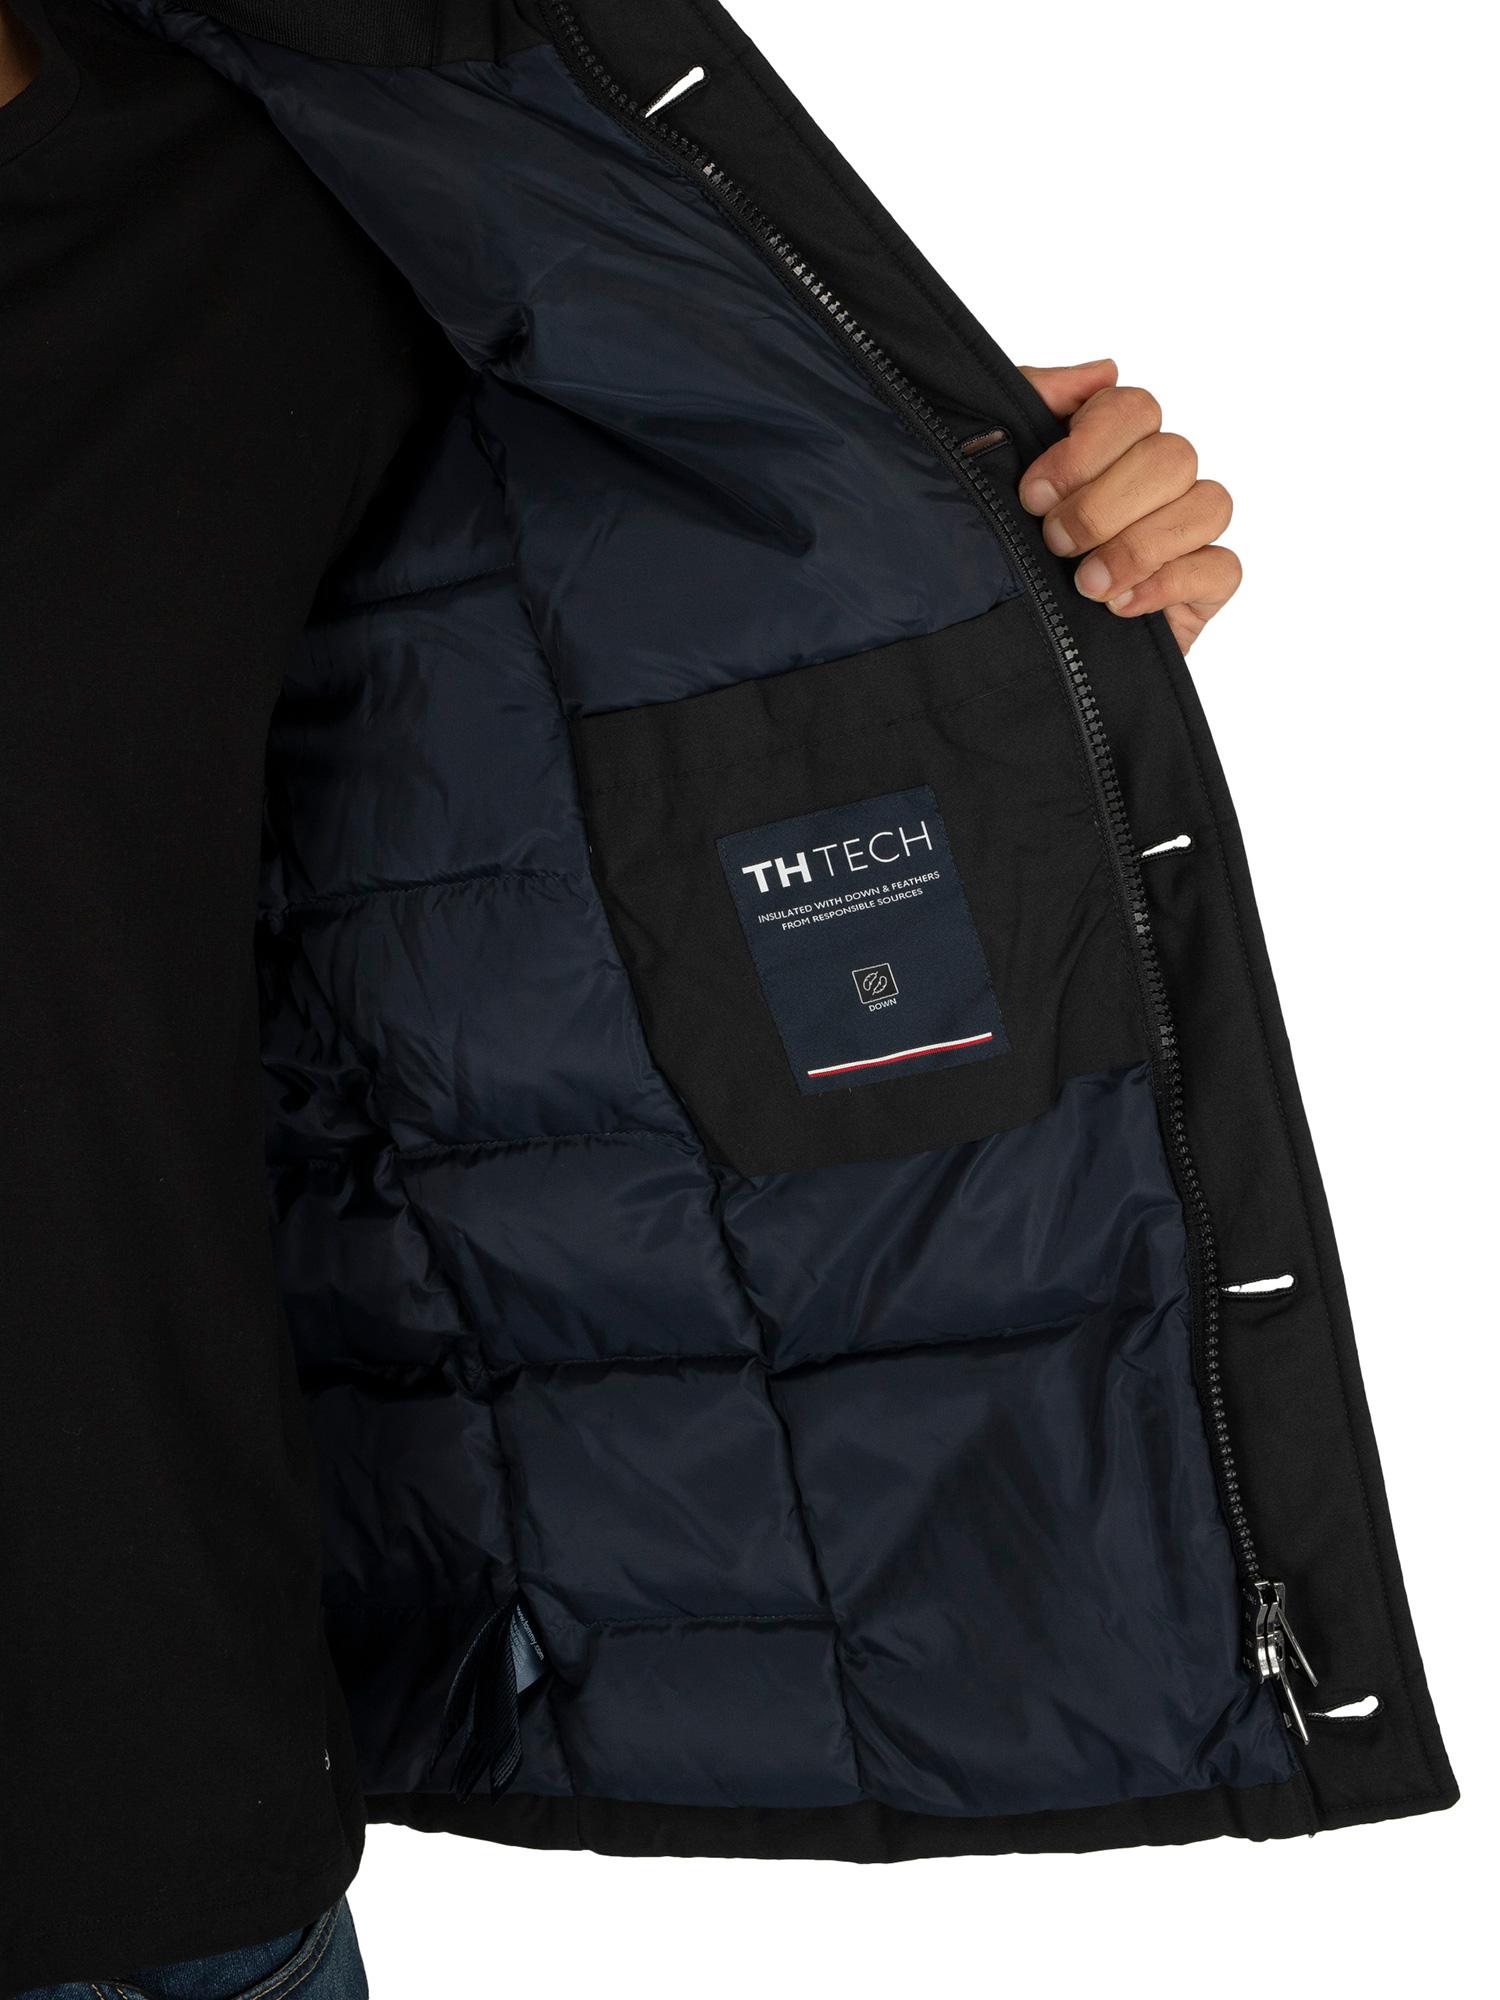 Tommy Hilfiger Hampton Down Parka Jacket in Black for Men | Lyst Canada